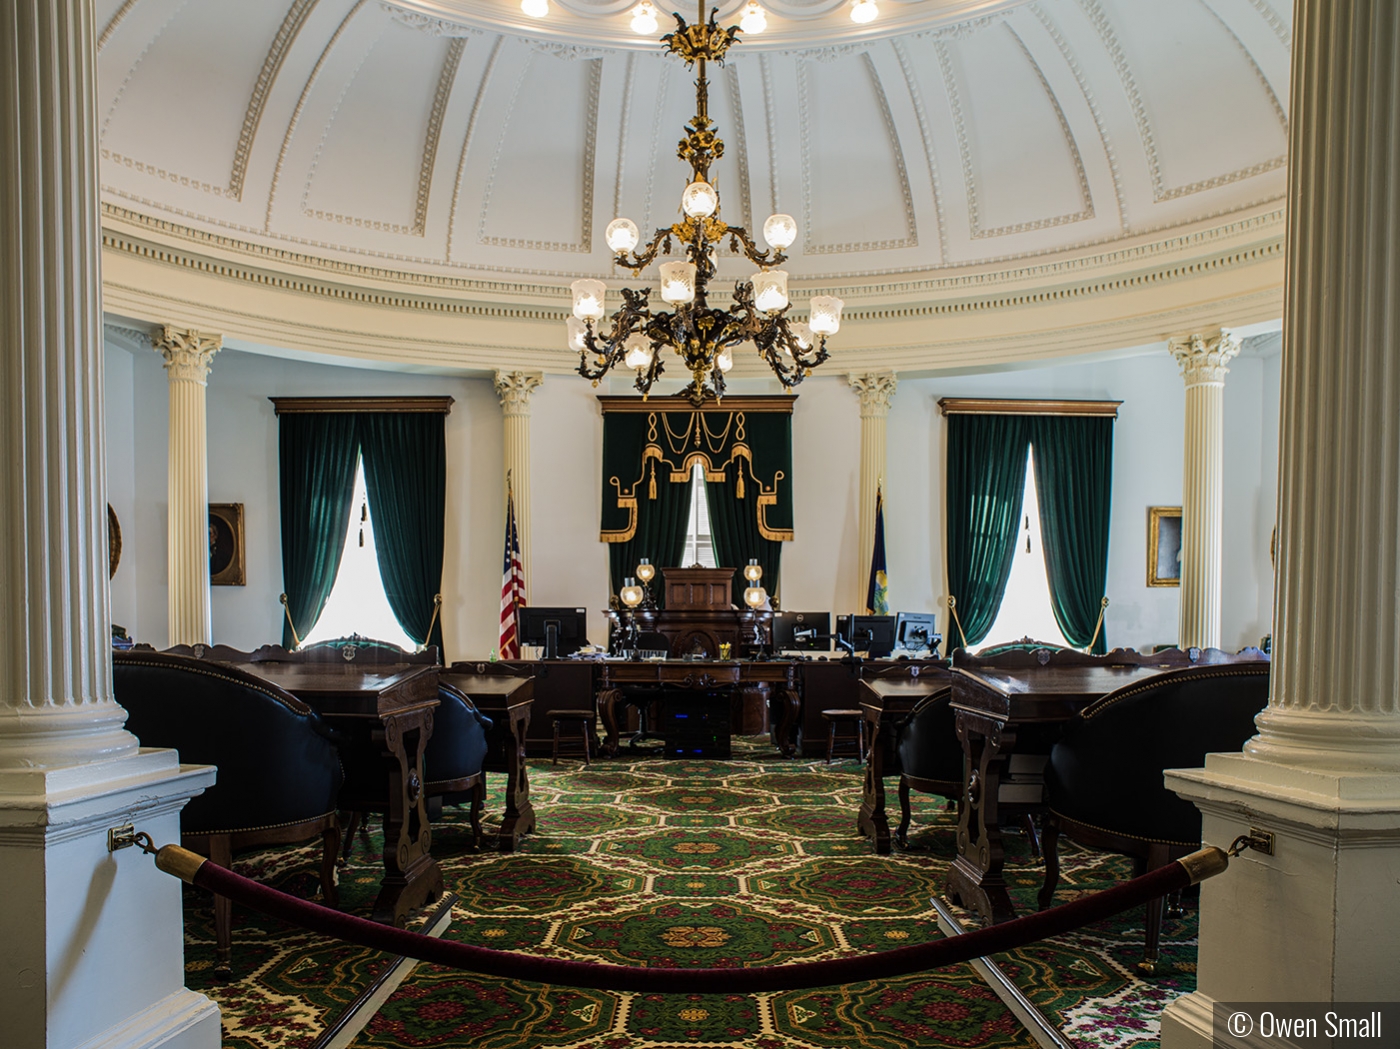 Vermont Capital Senate Chamber by Owen Small